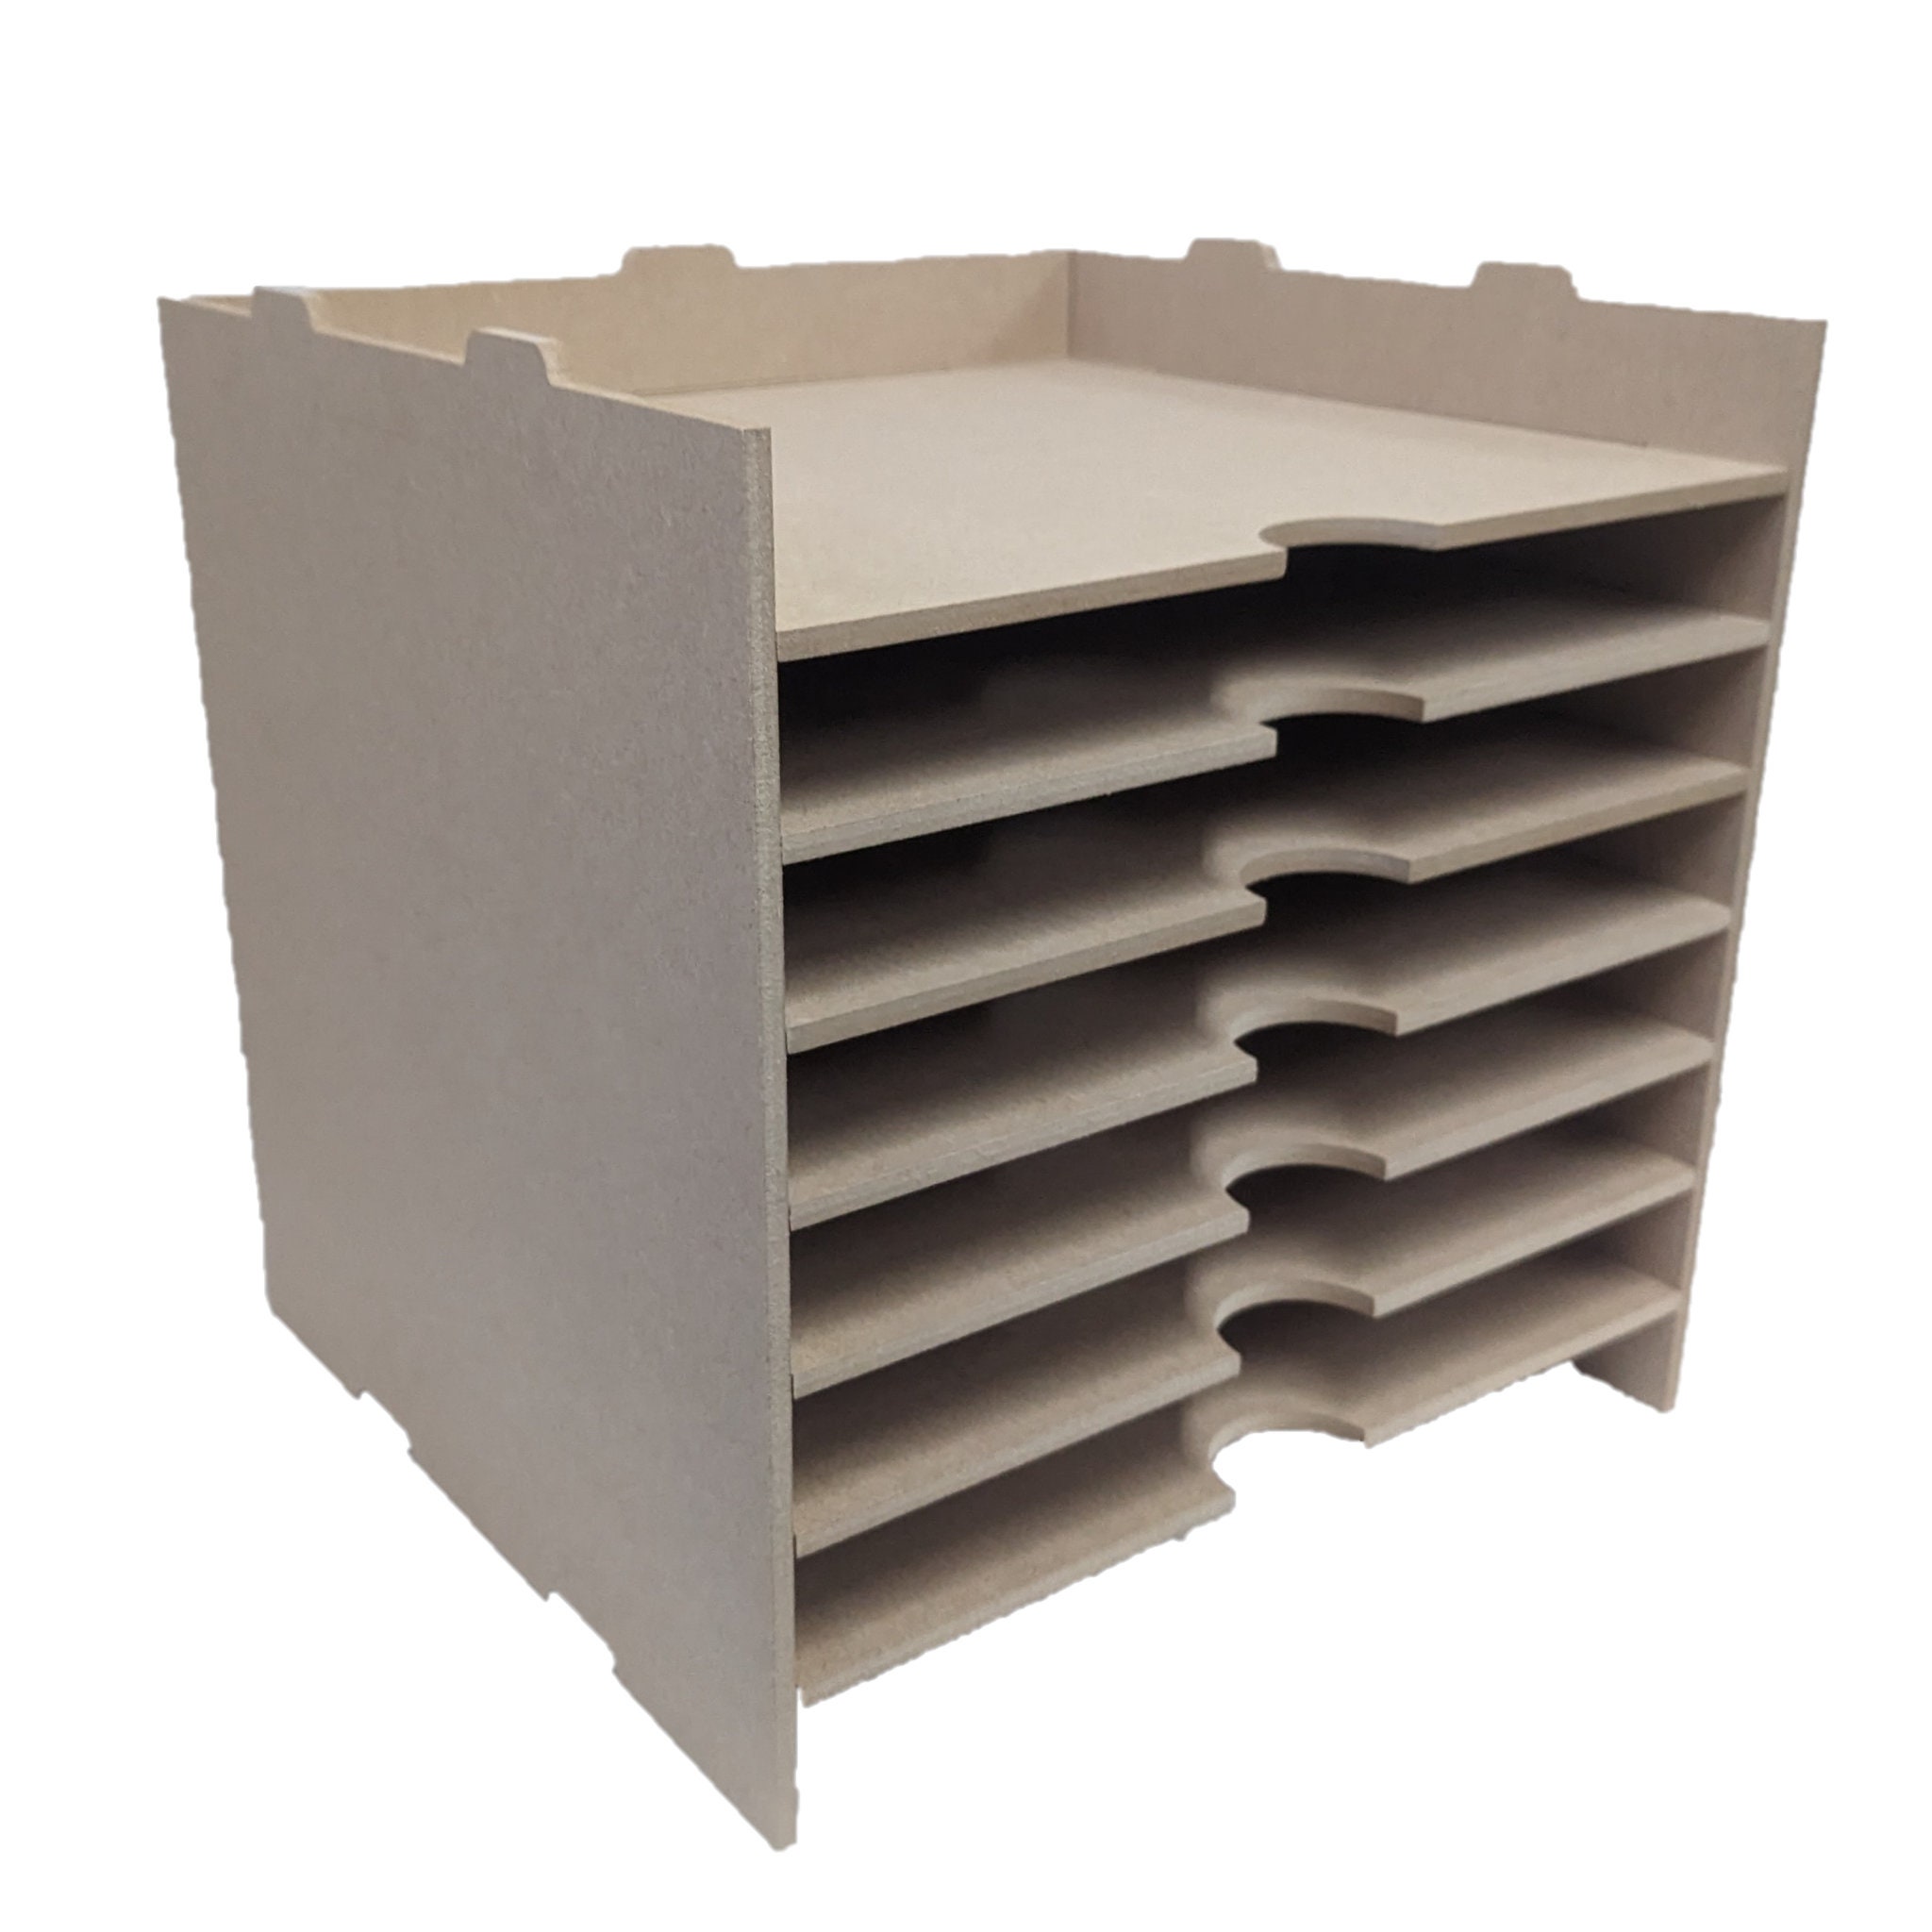 12 X 12 Inch Paper Storage Unit for Craft Etc Fits Ikea Kalex Cube